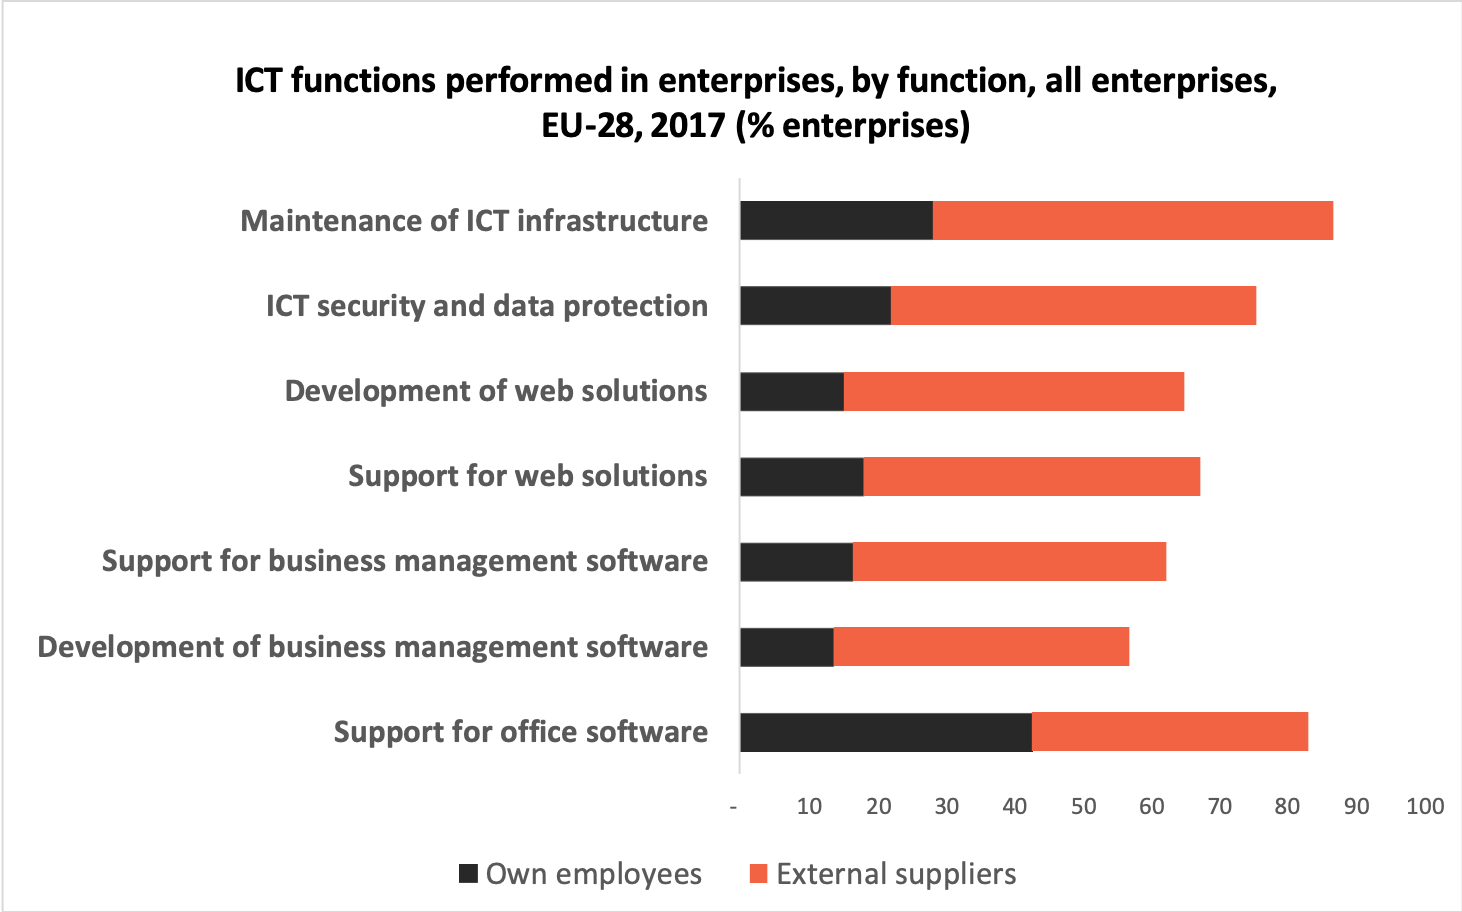 ICT functions performed in enterprises, by function, large enterprises, EU-28, 2017 (% enterprises)